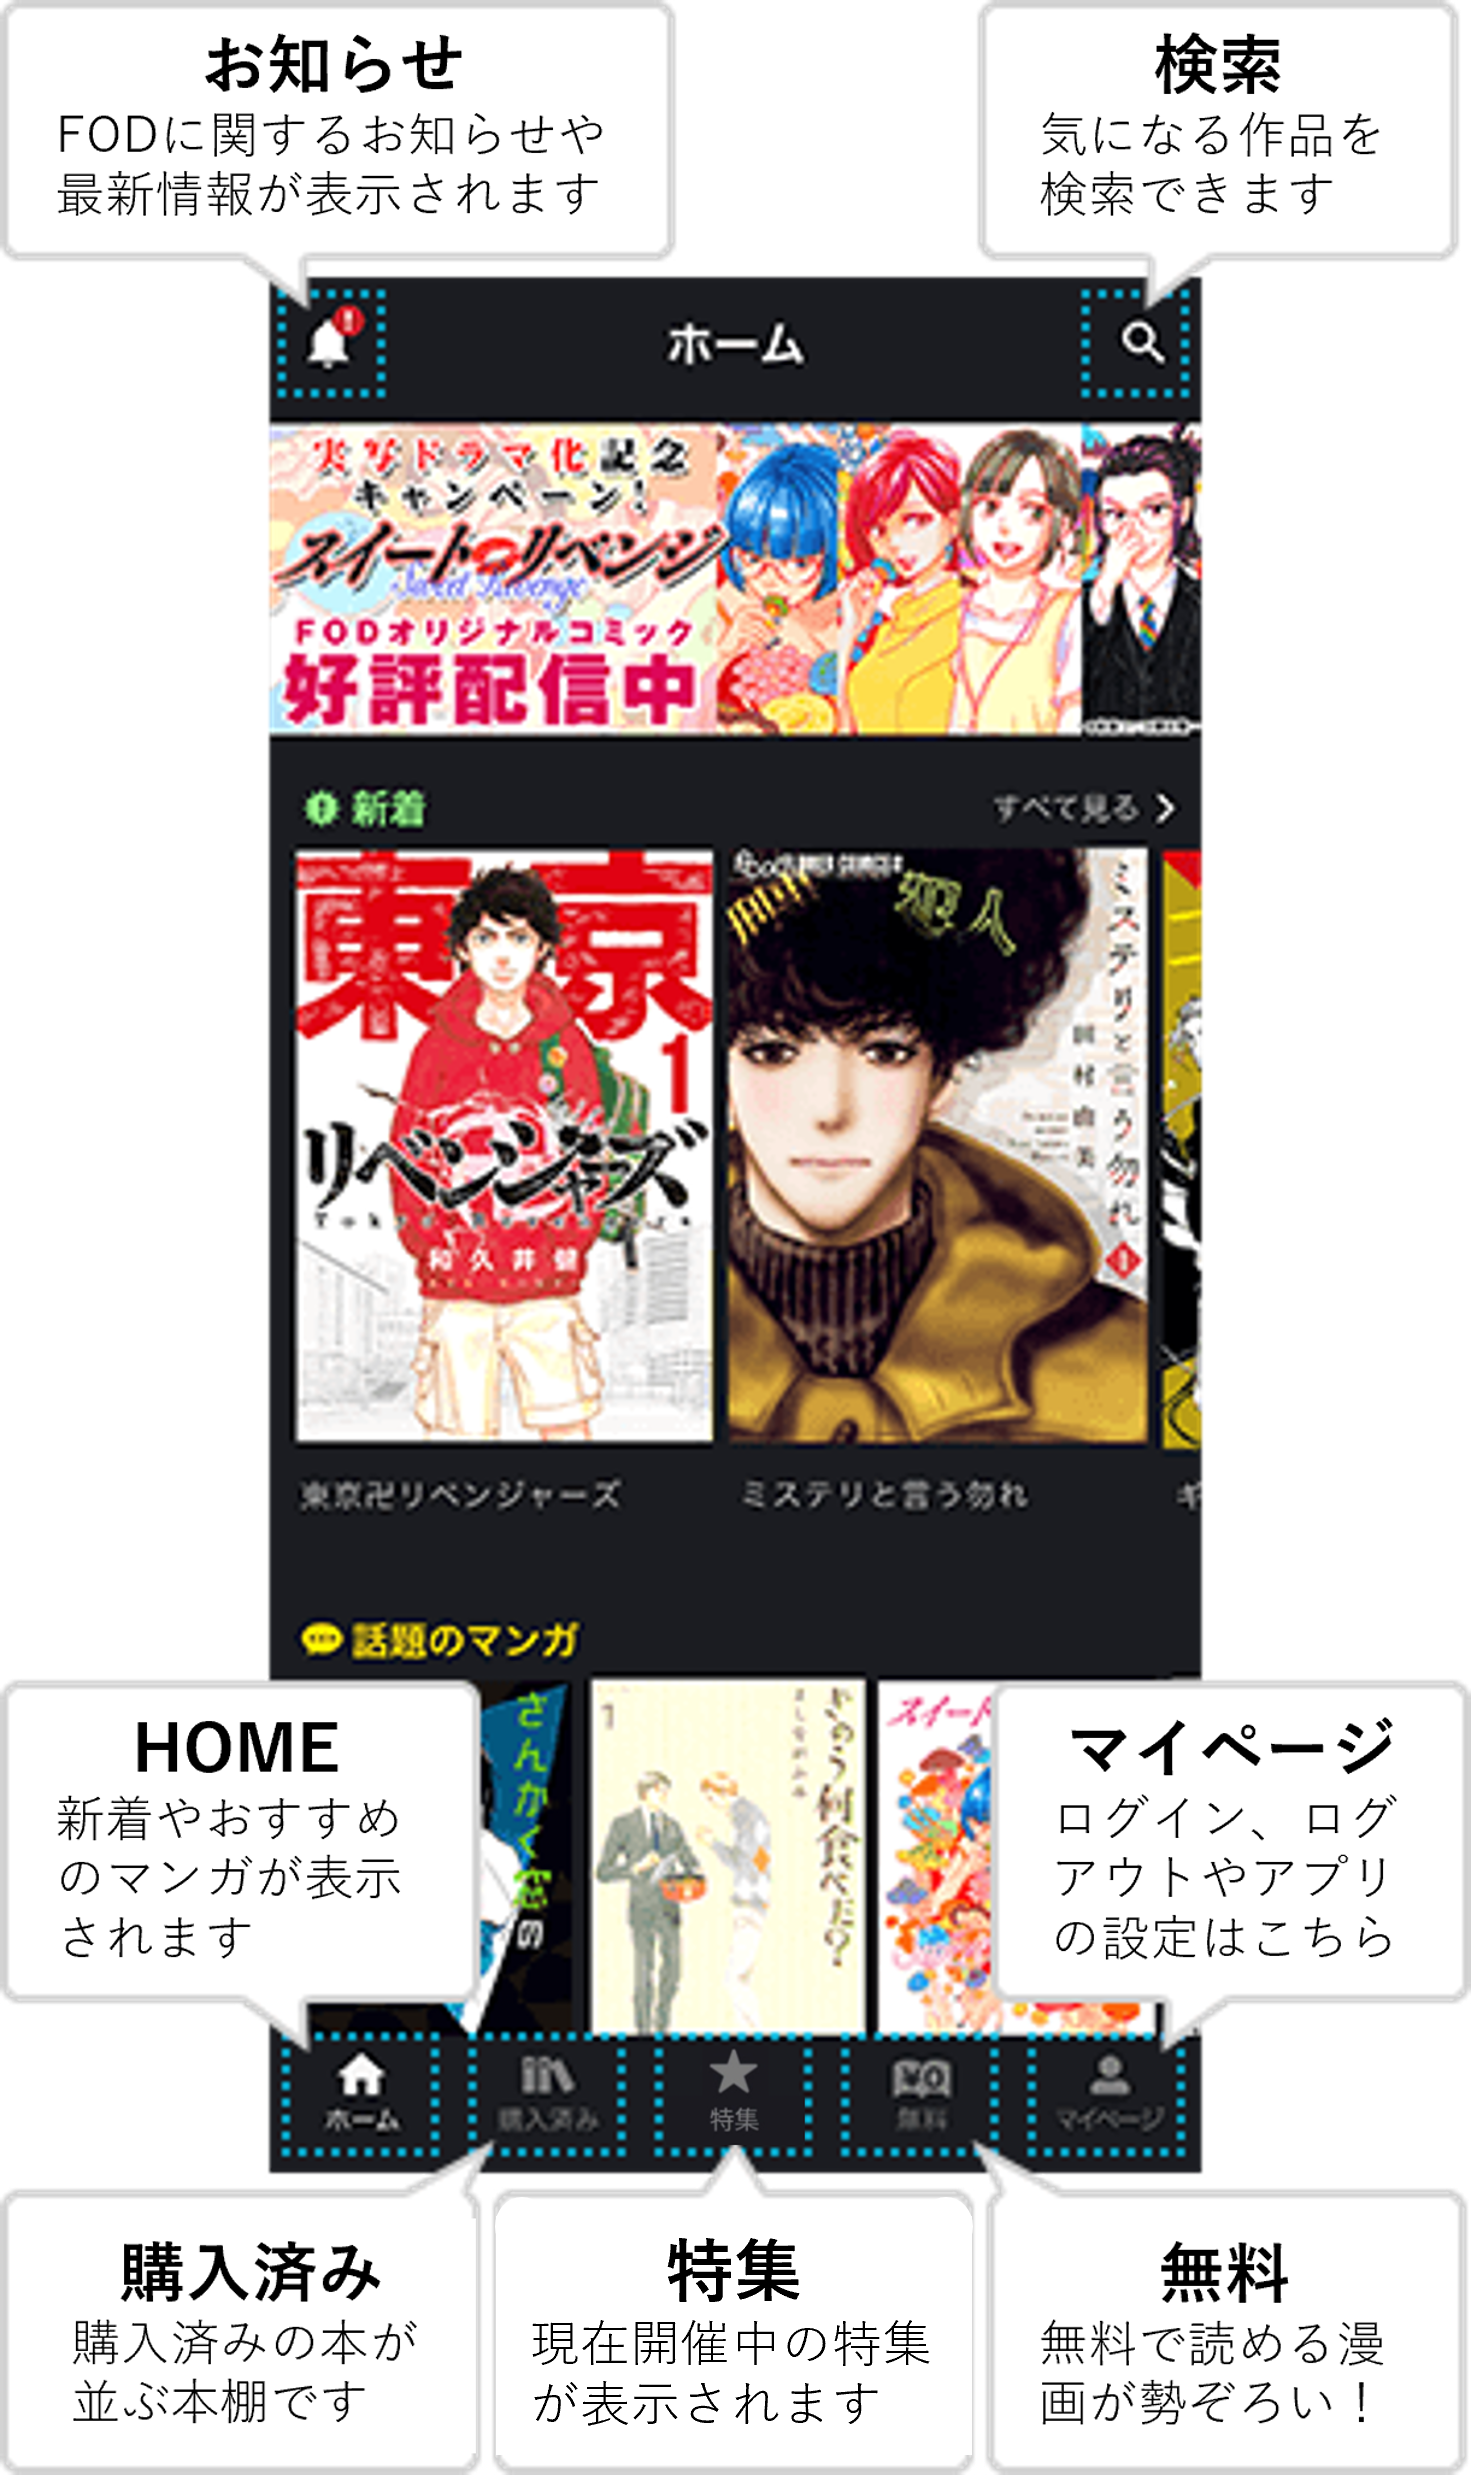 fod_manga_app_1.png